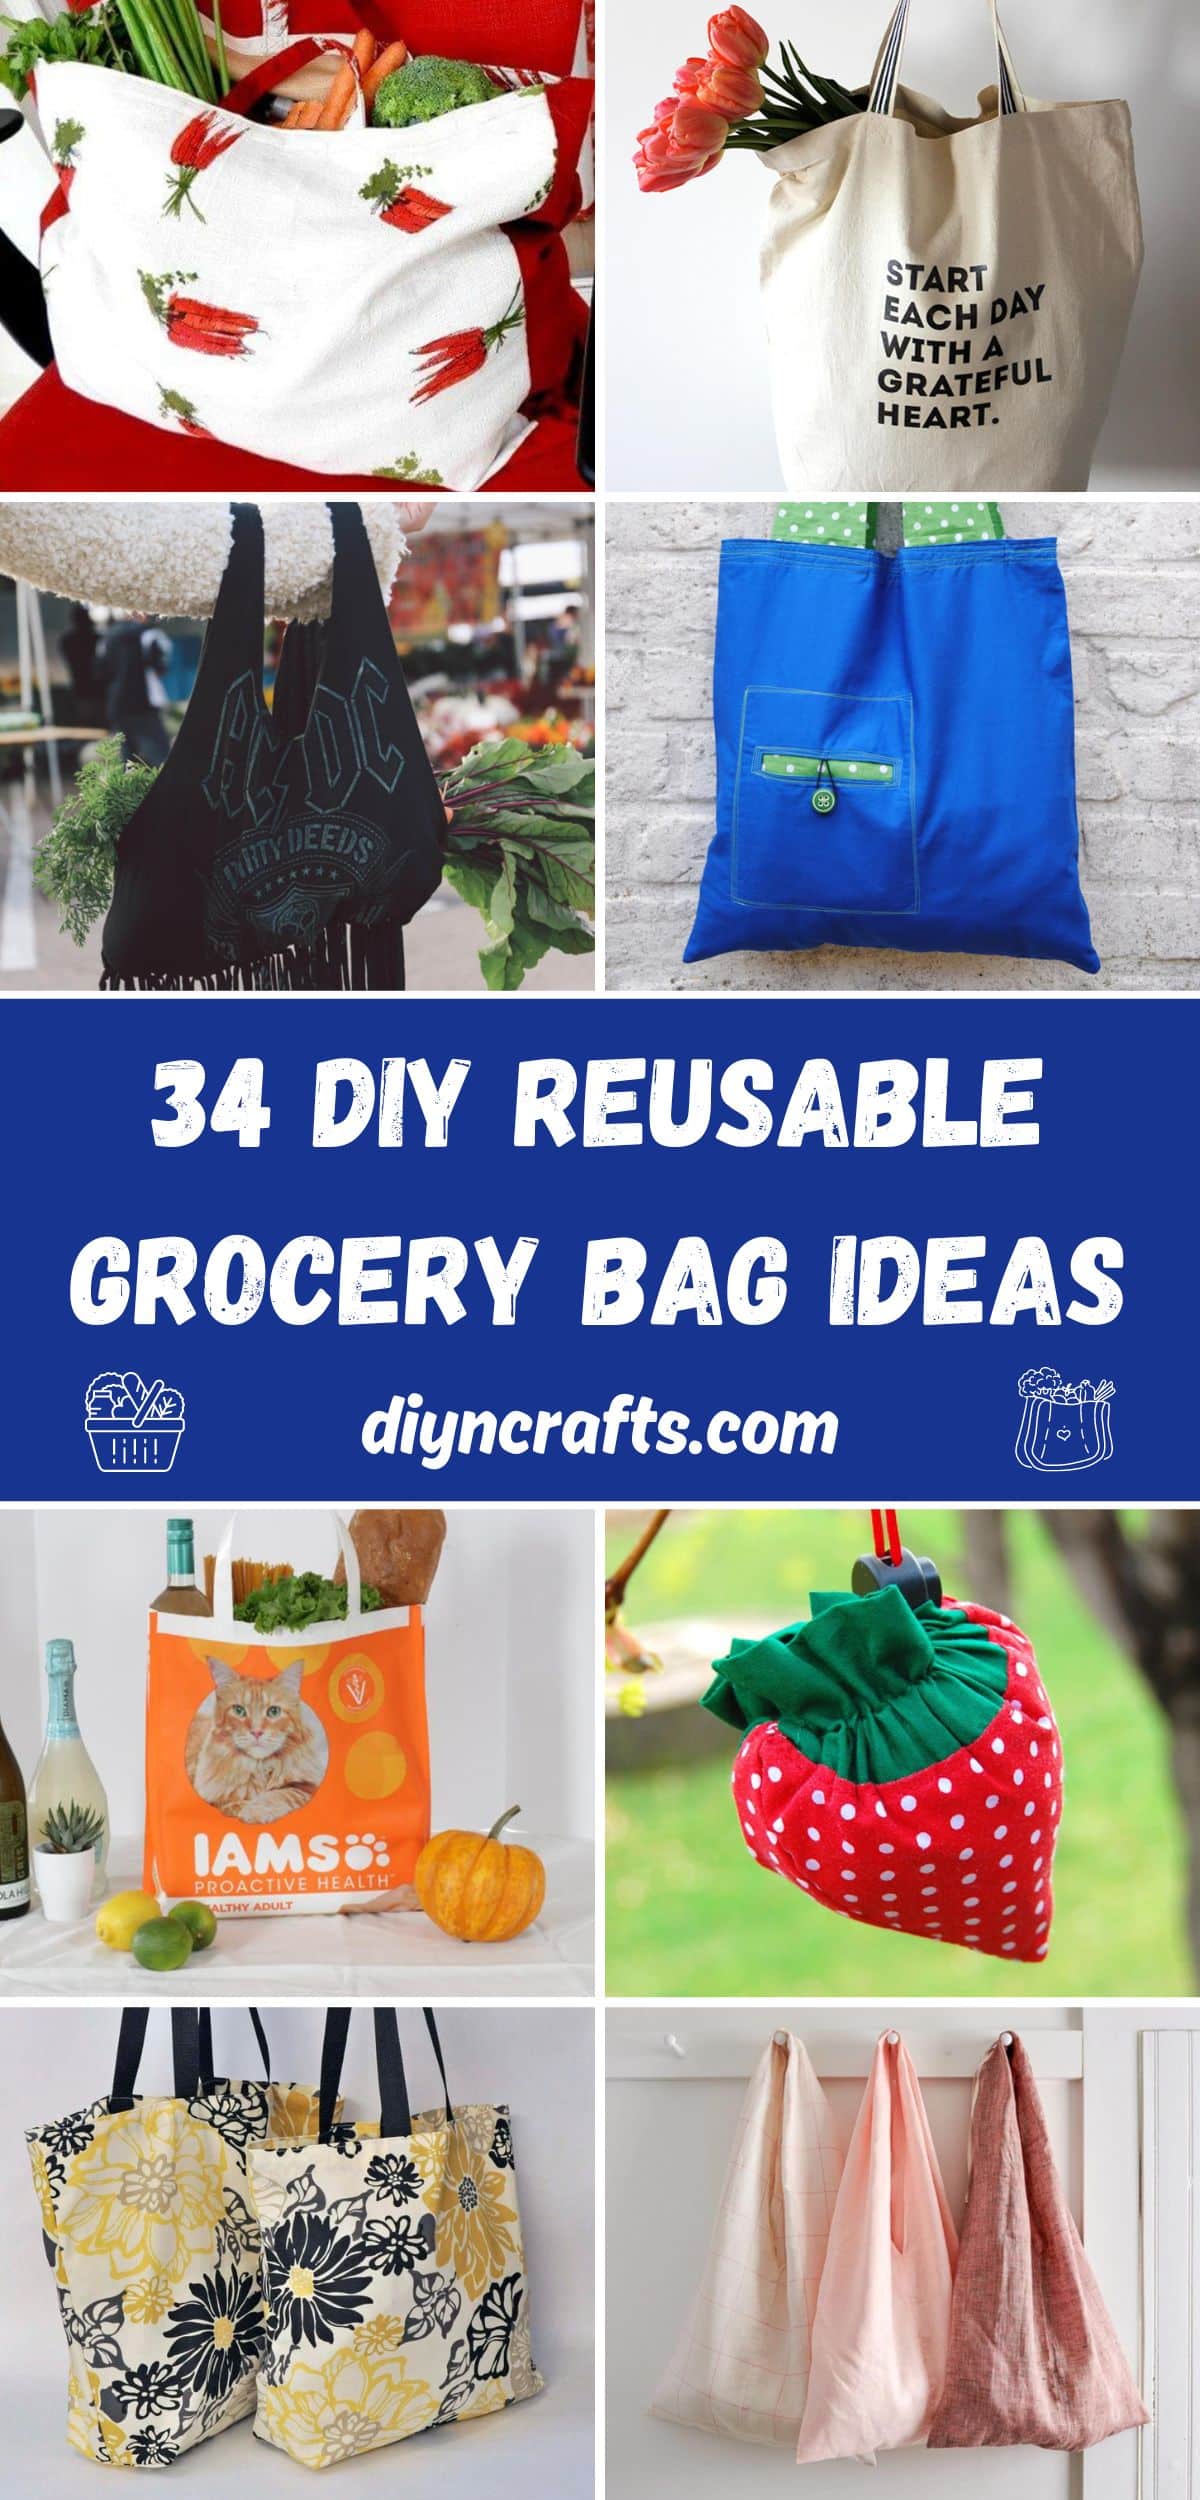 34 DIY Reusable Grocery Bag Ideas collage.